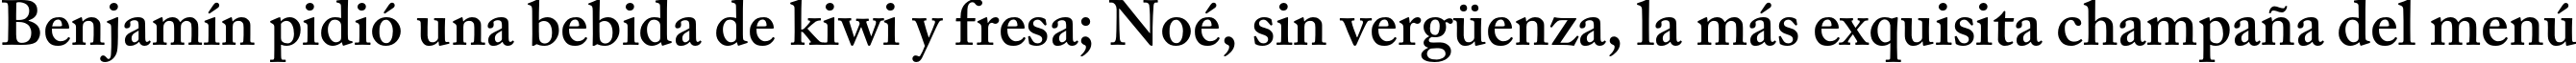 Пример написания шрифтом Adobe Caslon Pro Semibold текста на испанском